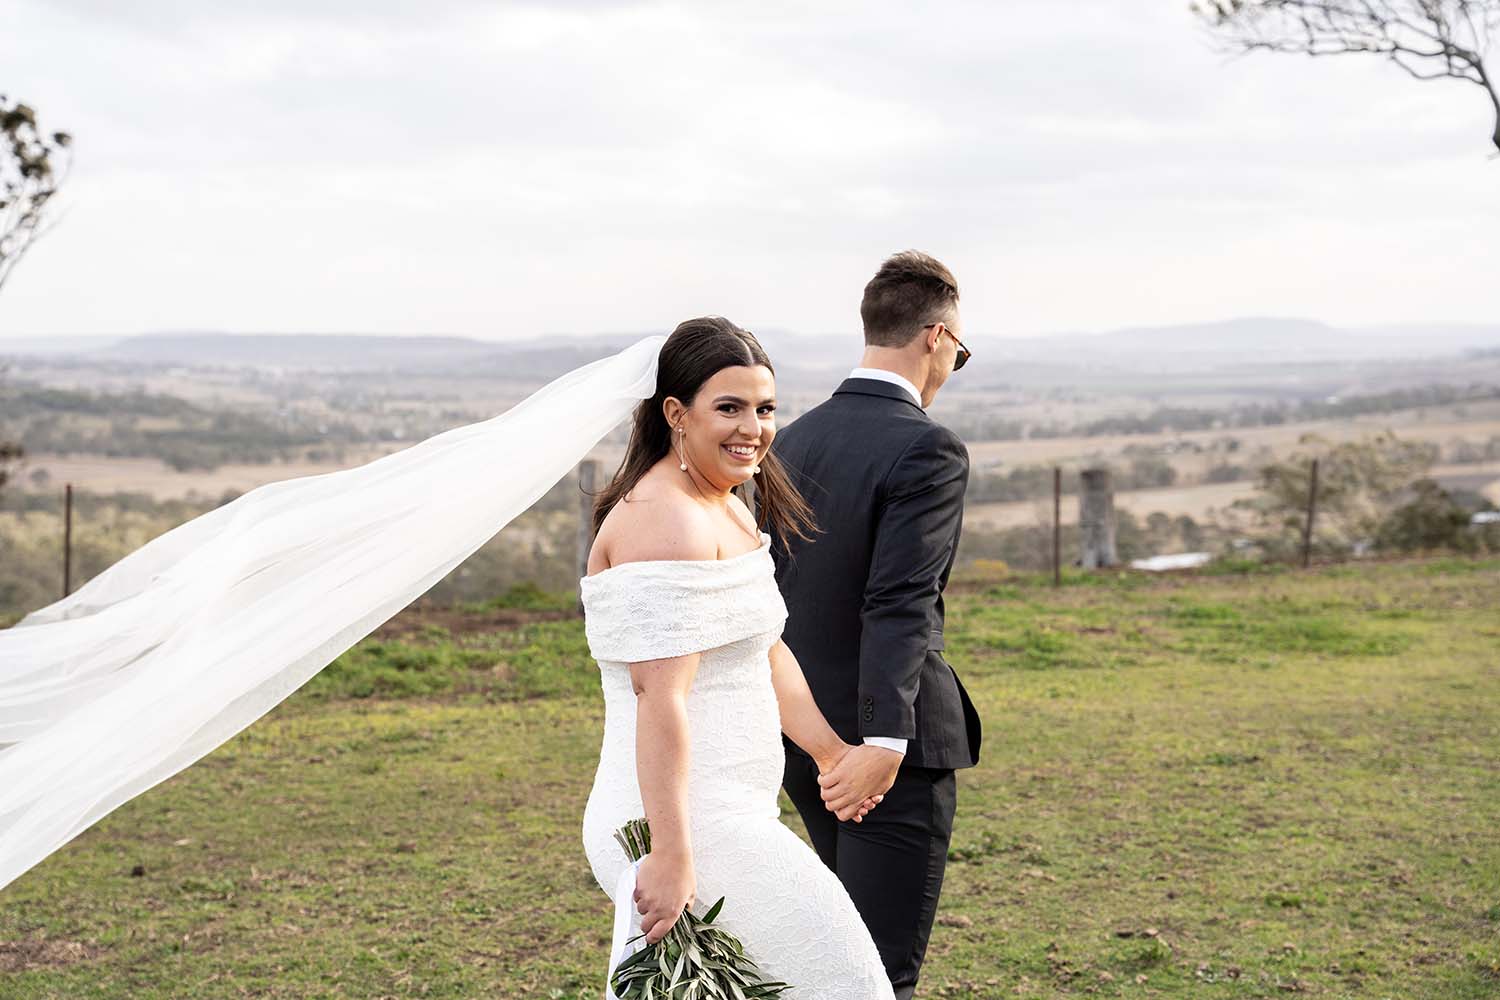 Wedding Photography - Walking bride and groom